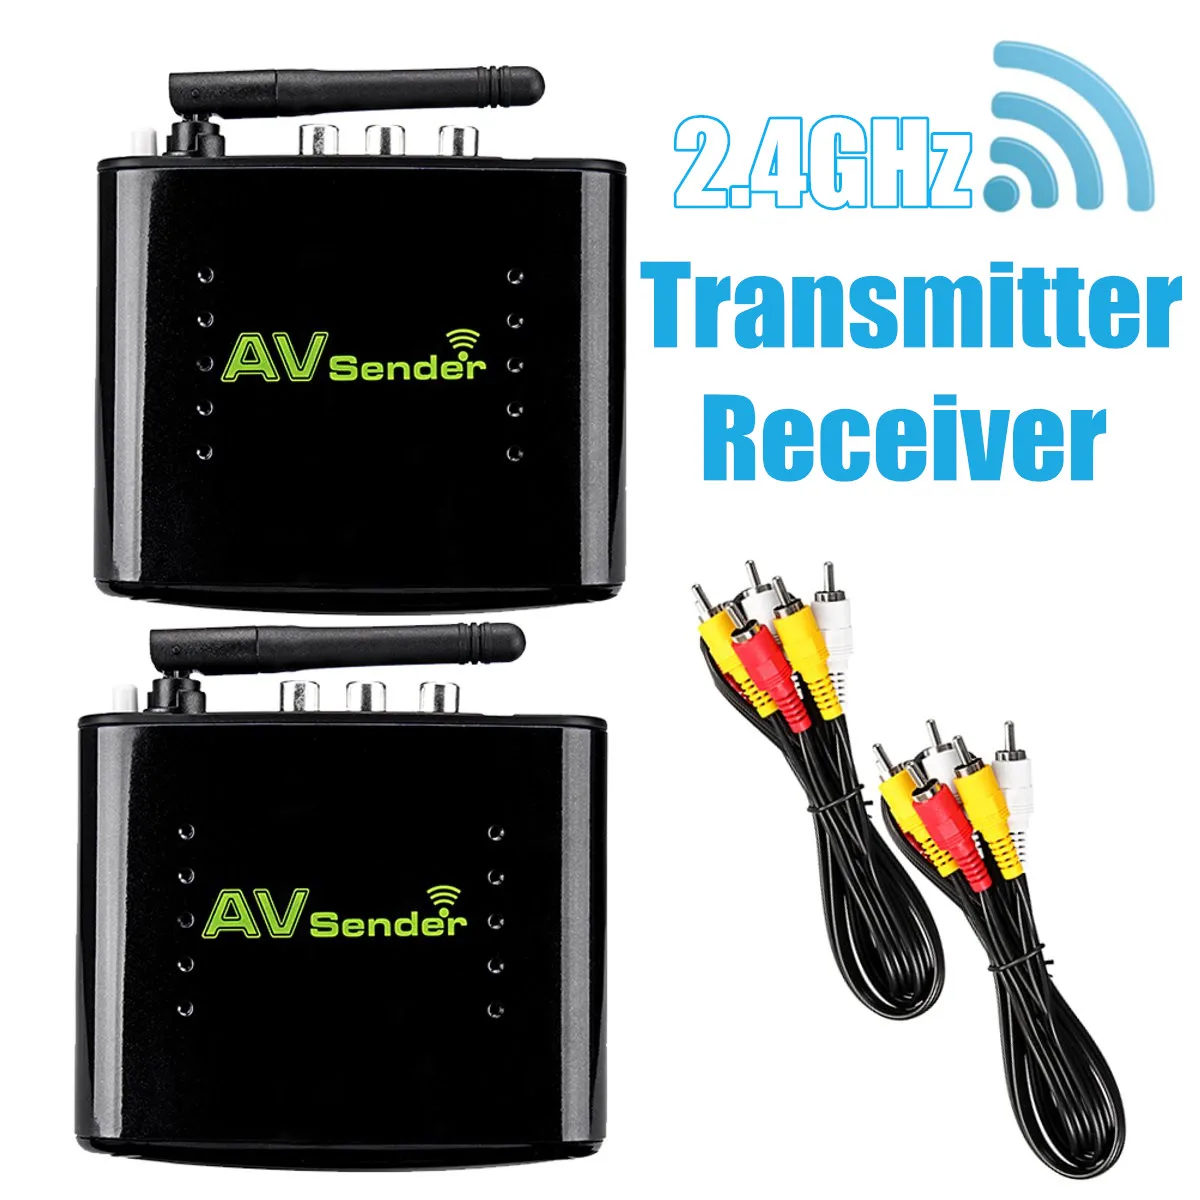 

2.4GHz 150M/492ft AV Sender Wireless Transmitter Receiver IR Remote Extender Digital STB Sharing Device Audio Video Equipment